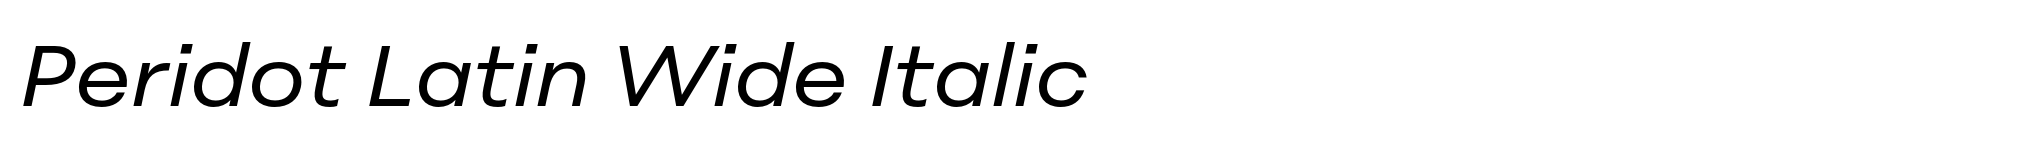 Peridot Latin Wide Italic image